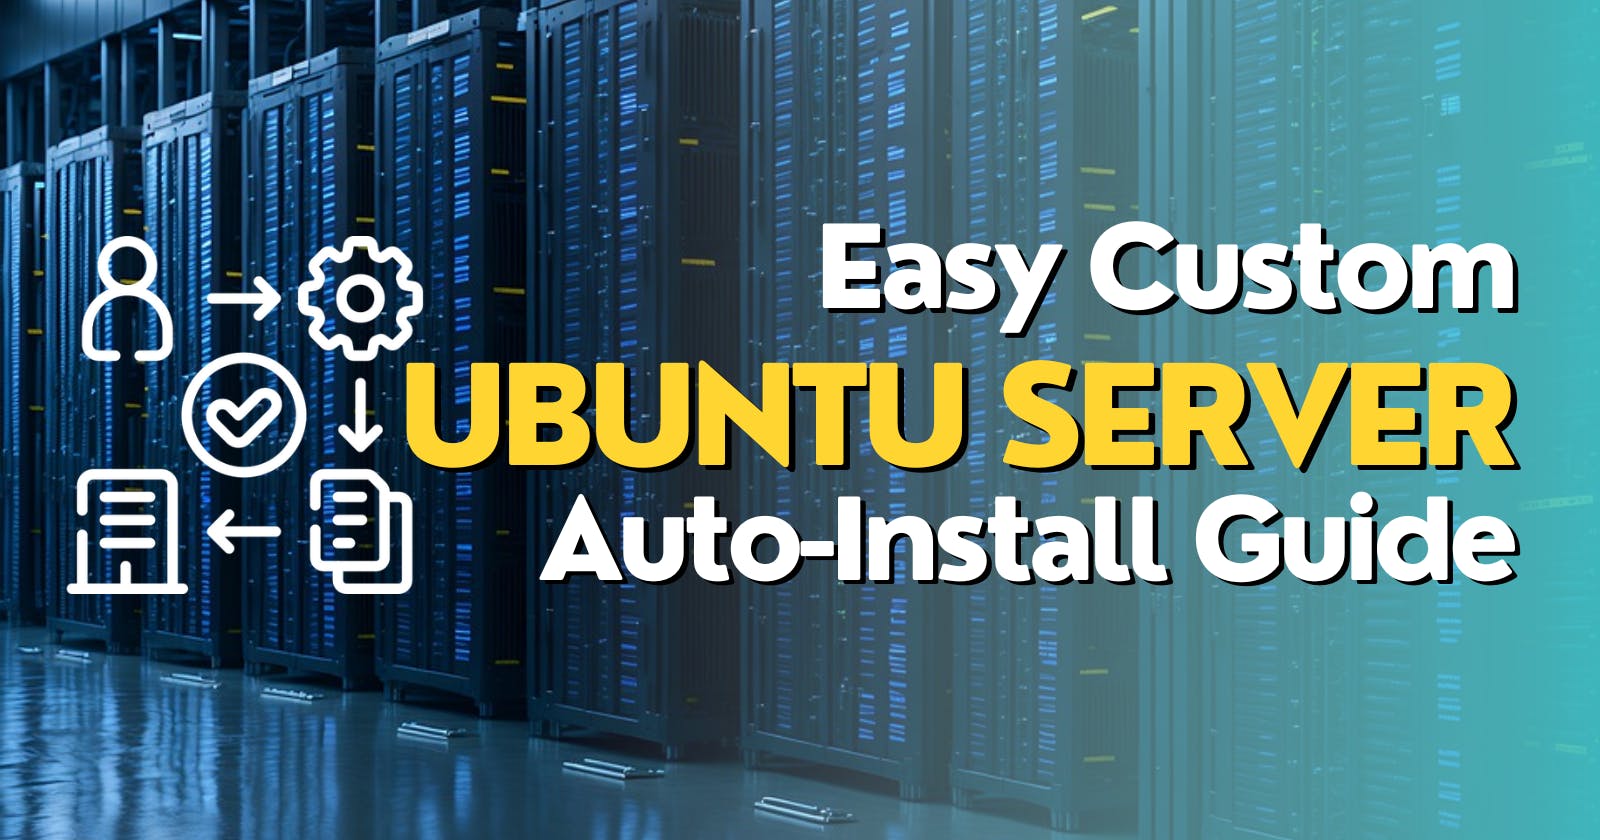 Easy Custom Ubuntu Server Auto-Install Guide